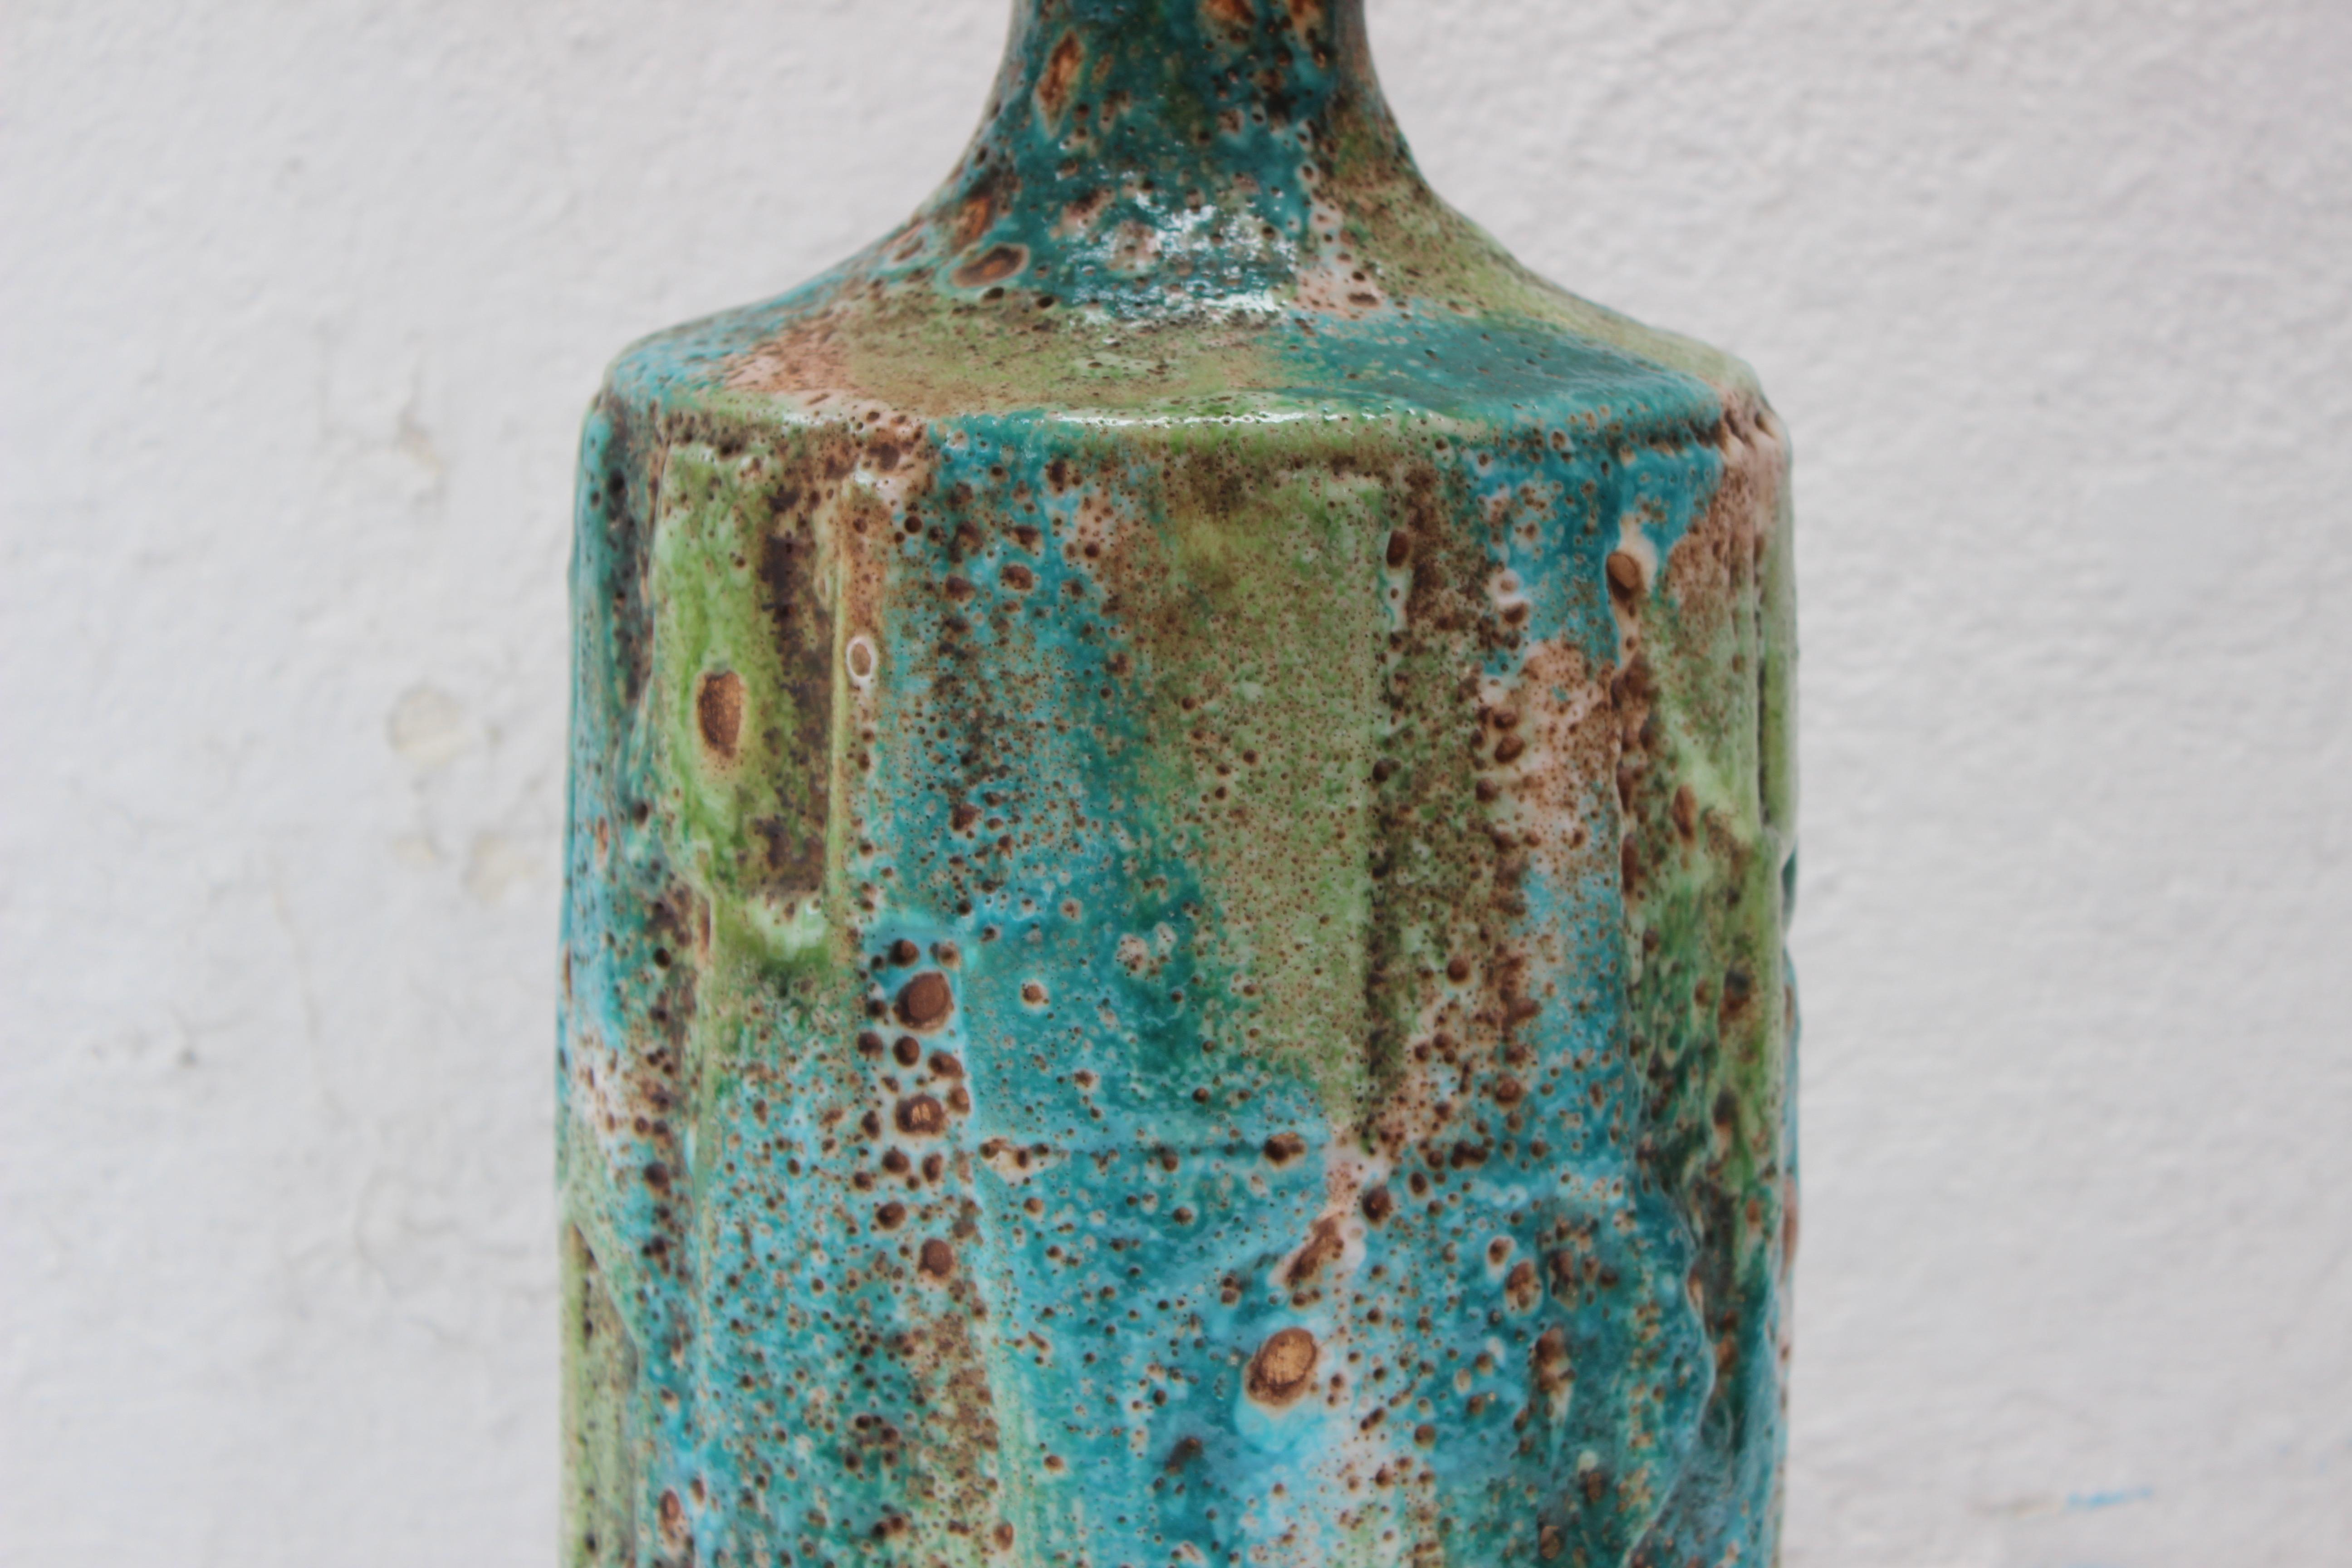 Modern blue ceramic lamp

Base measures: 8.75